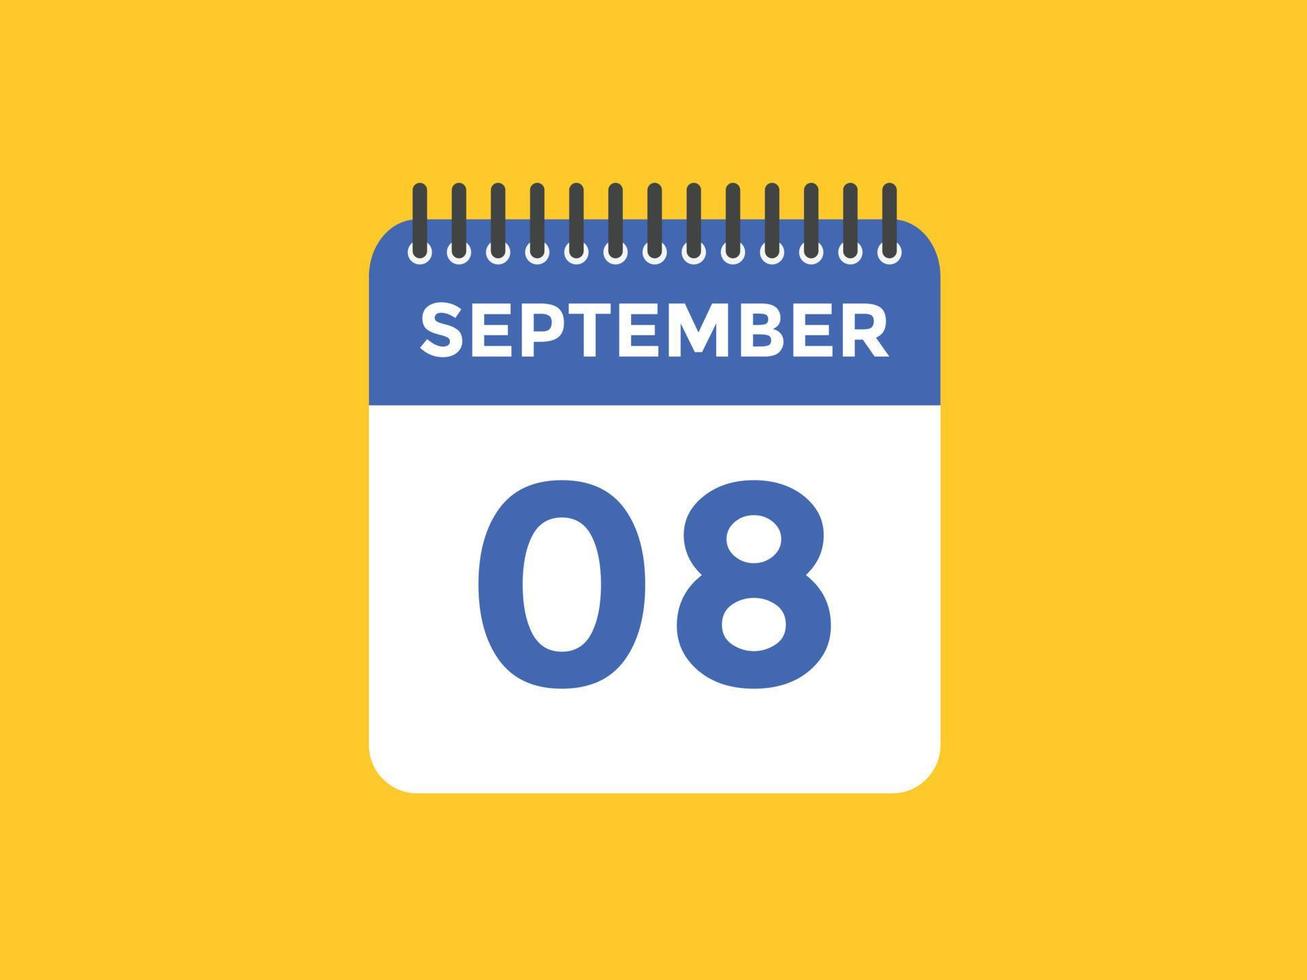 september 8 calendar reminder. 8th september daily calendar icon template. Calendar 8th september icon Design template. Vector illustration